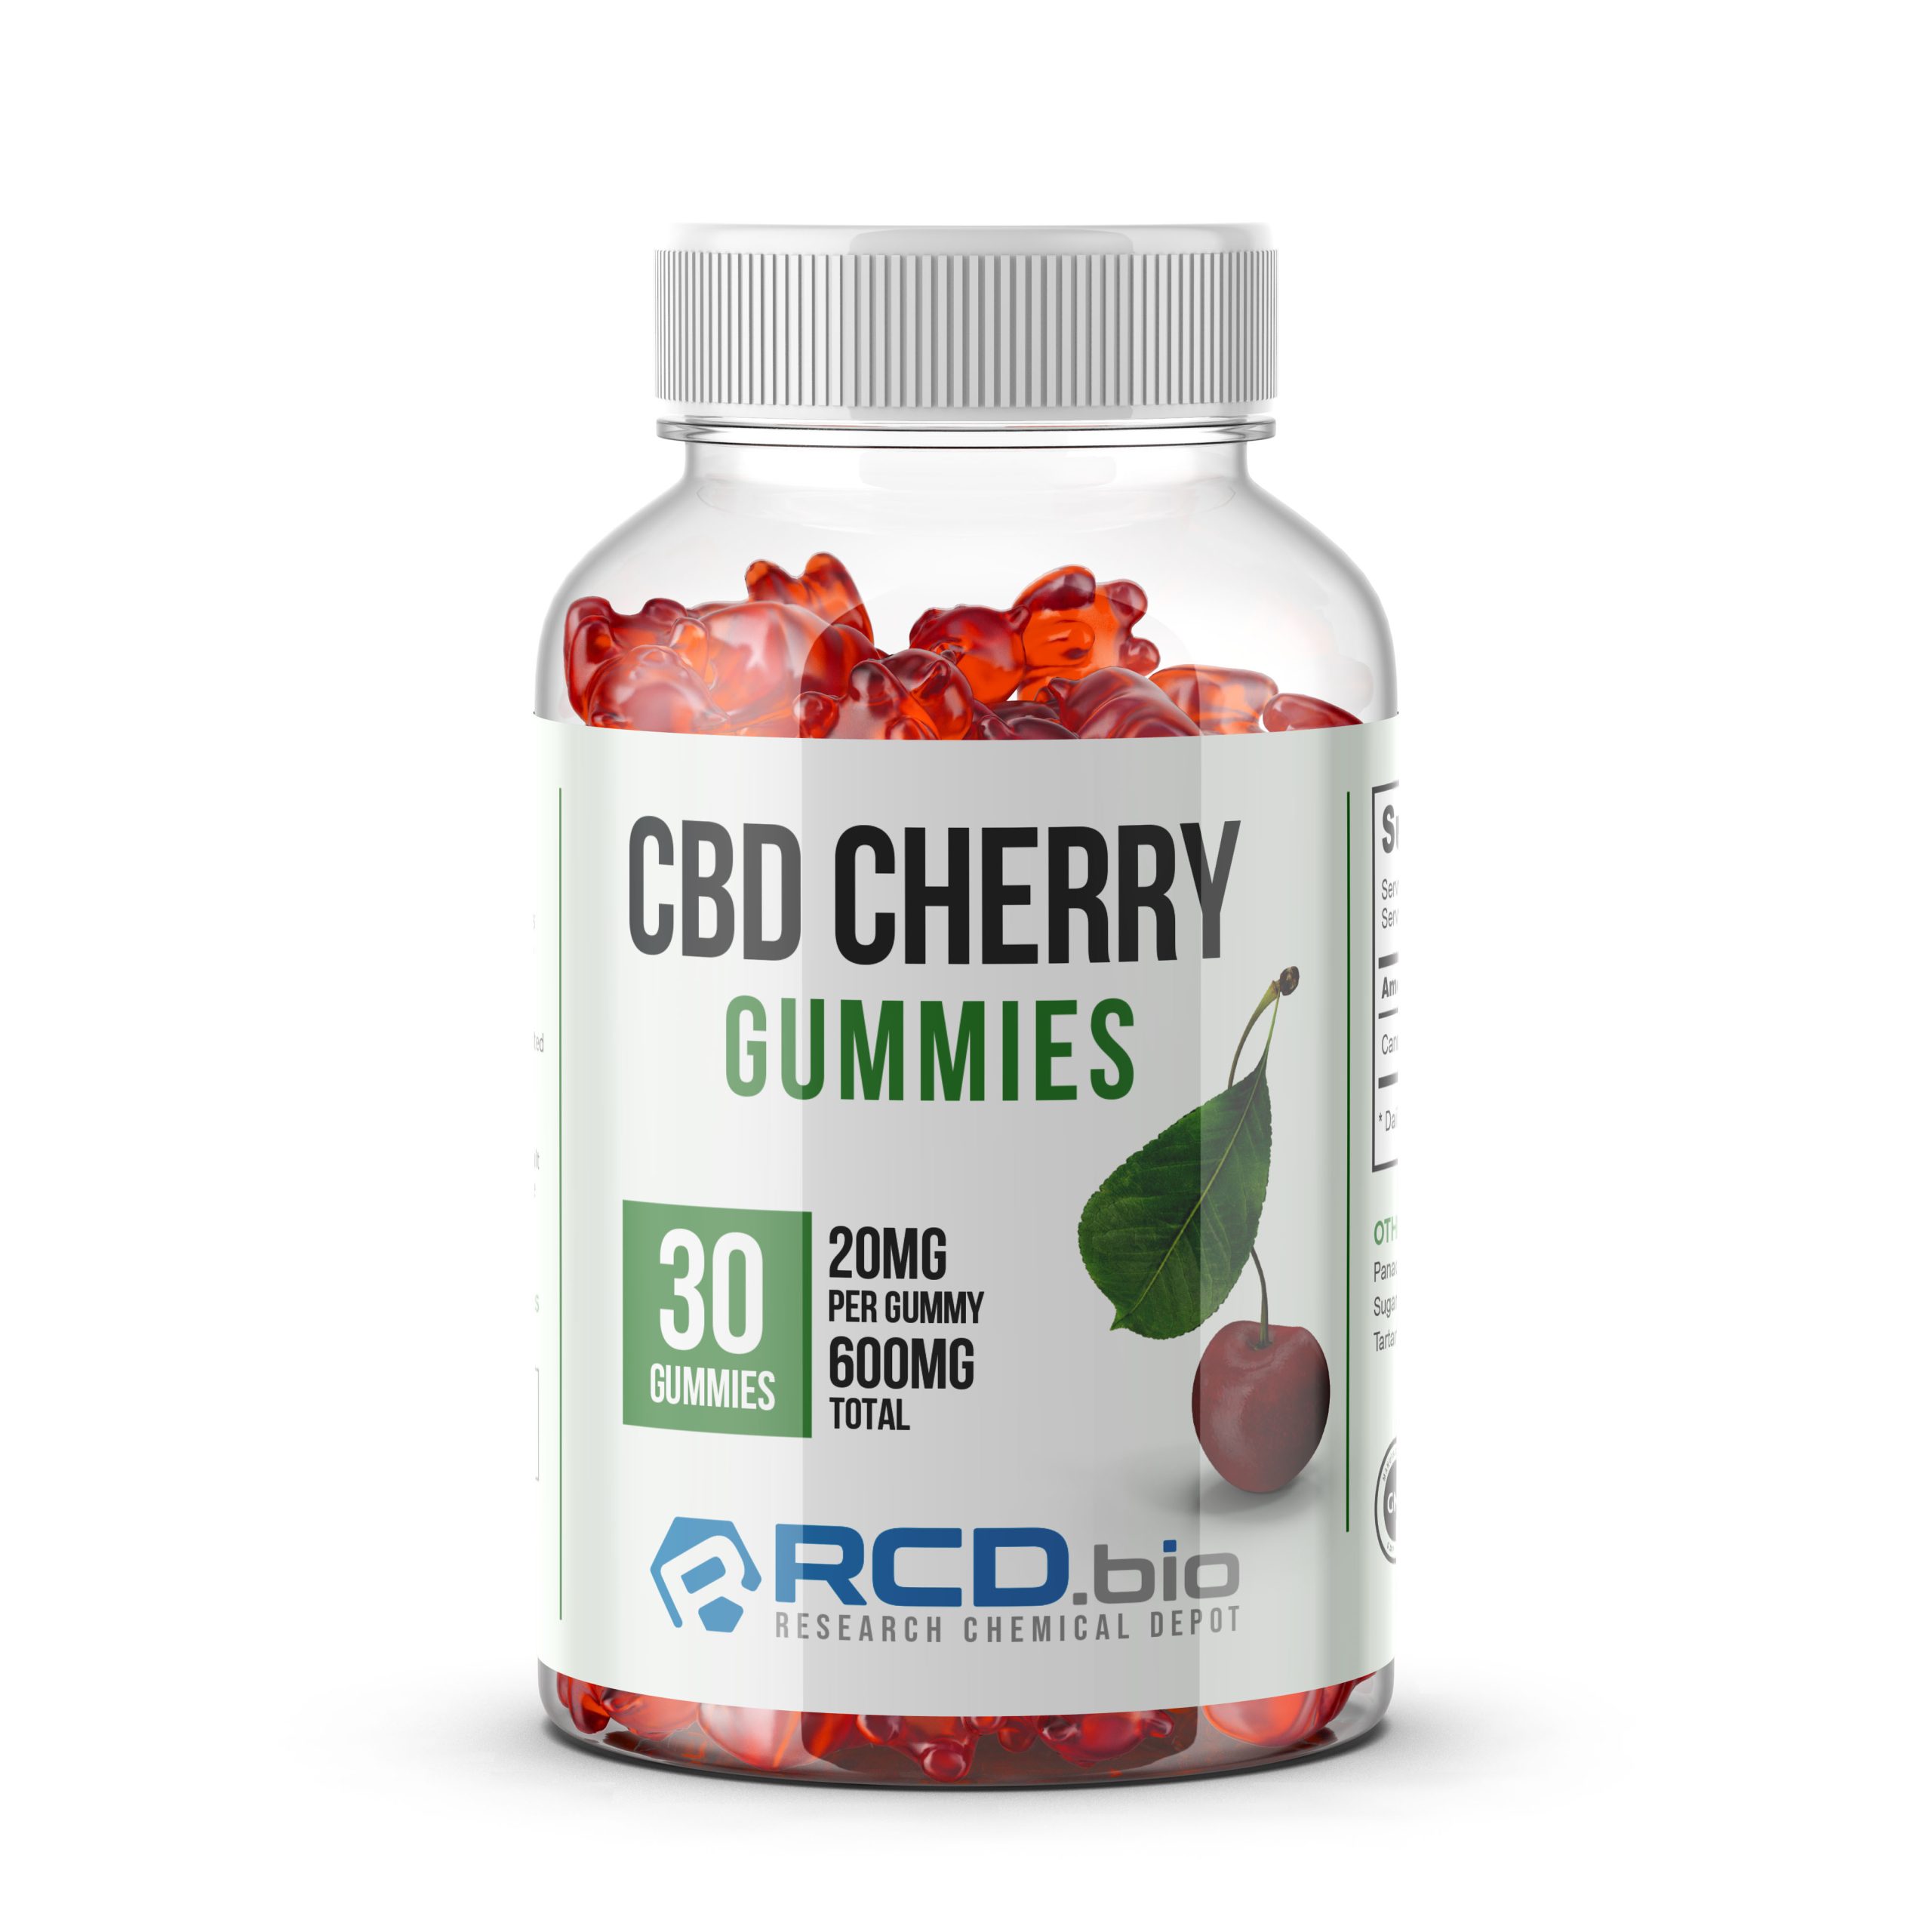 CBD Cherry Gummies For Sale | Fast Shipping | RCD.bio